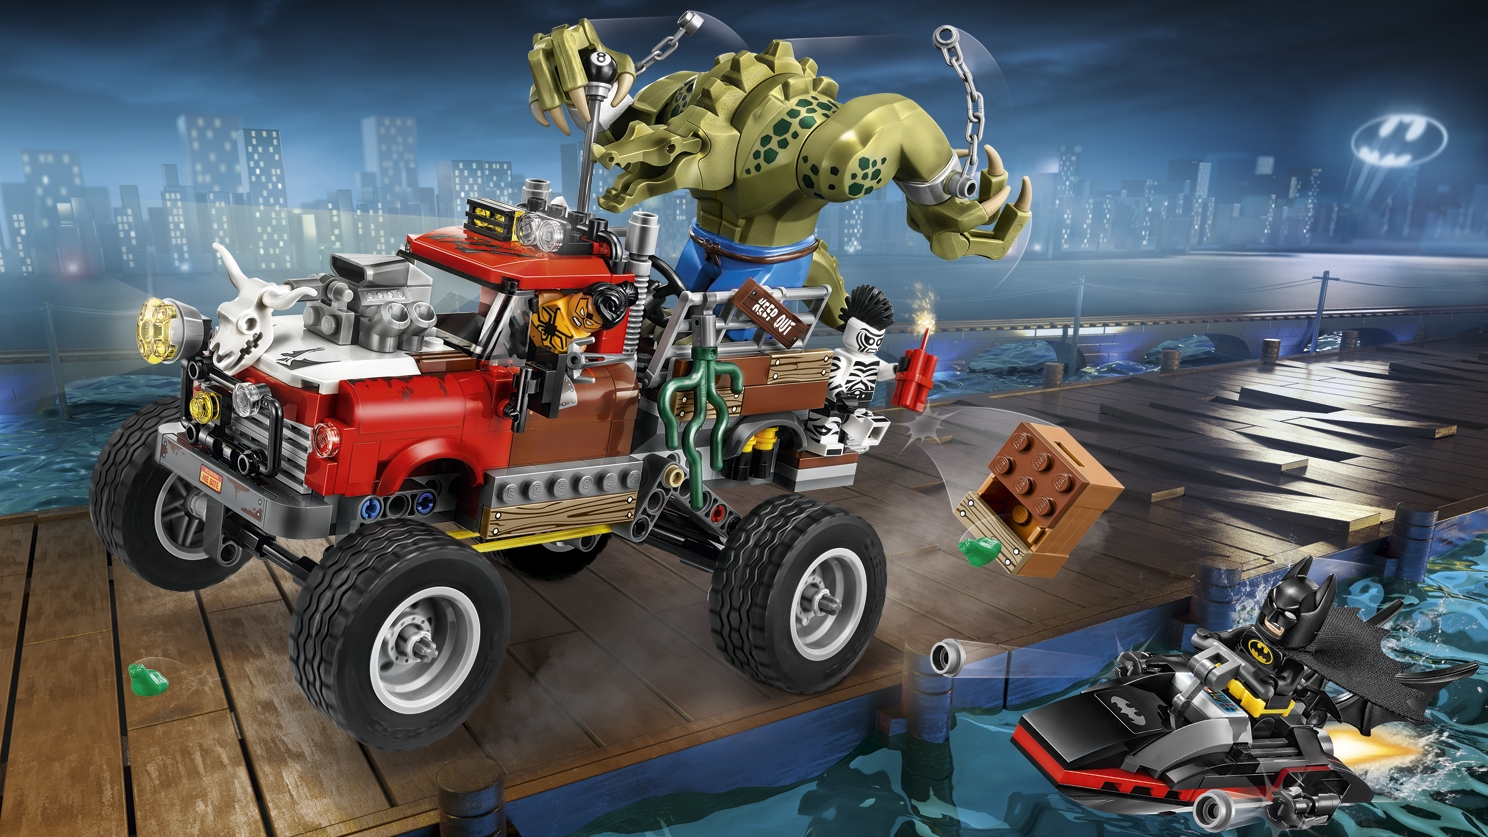 Killer Croc™ Tail-Gator 70907 - LEGO® Batman™ Sets - LEGO.com for kids